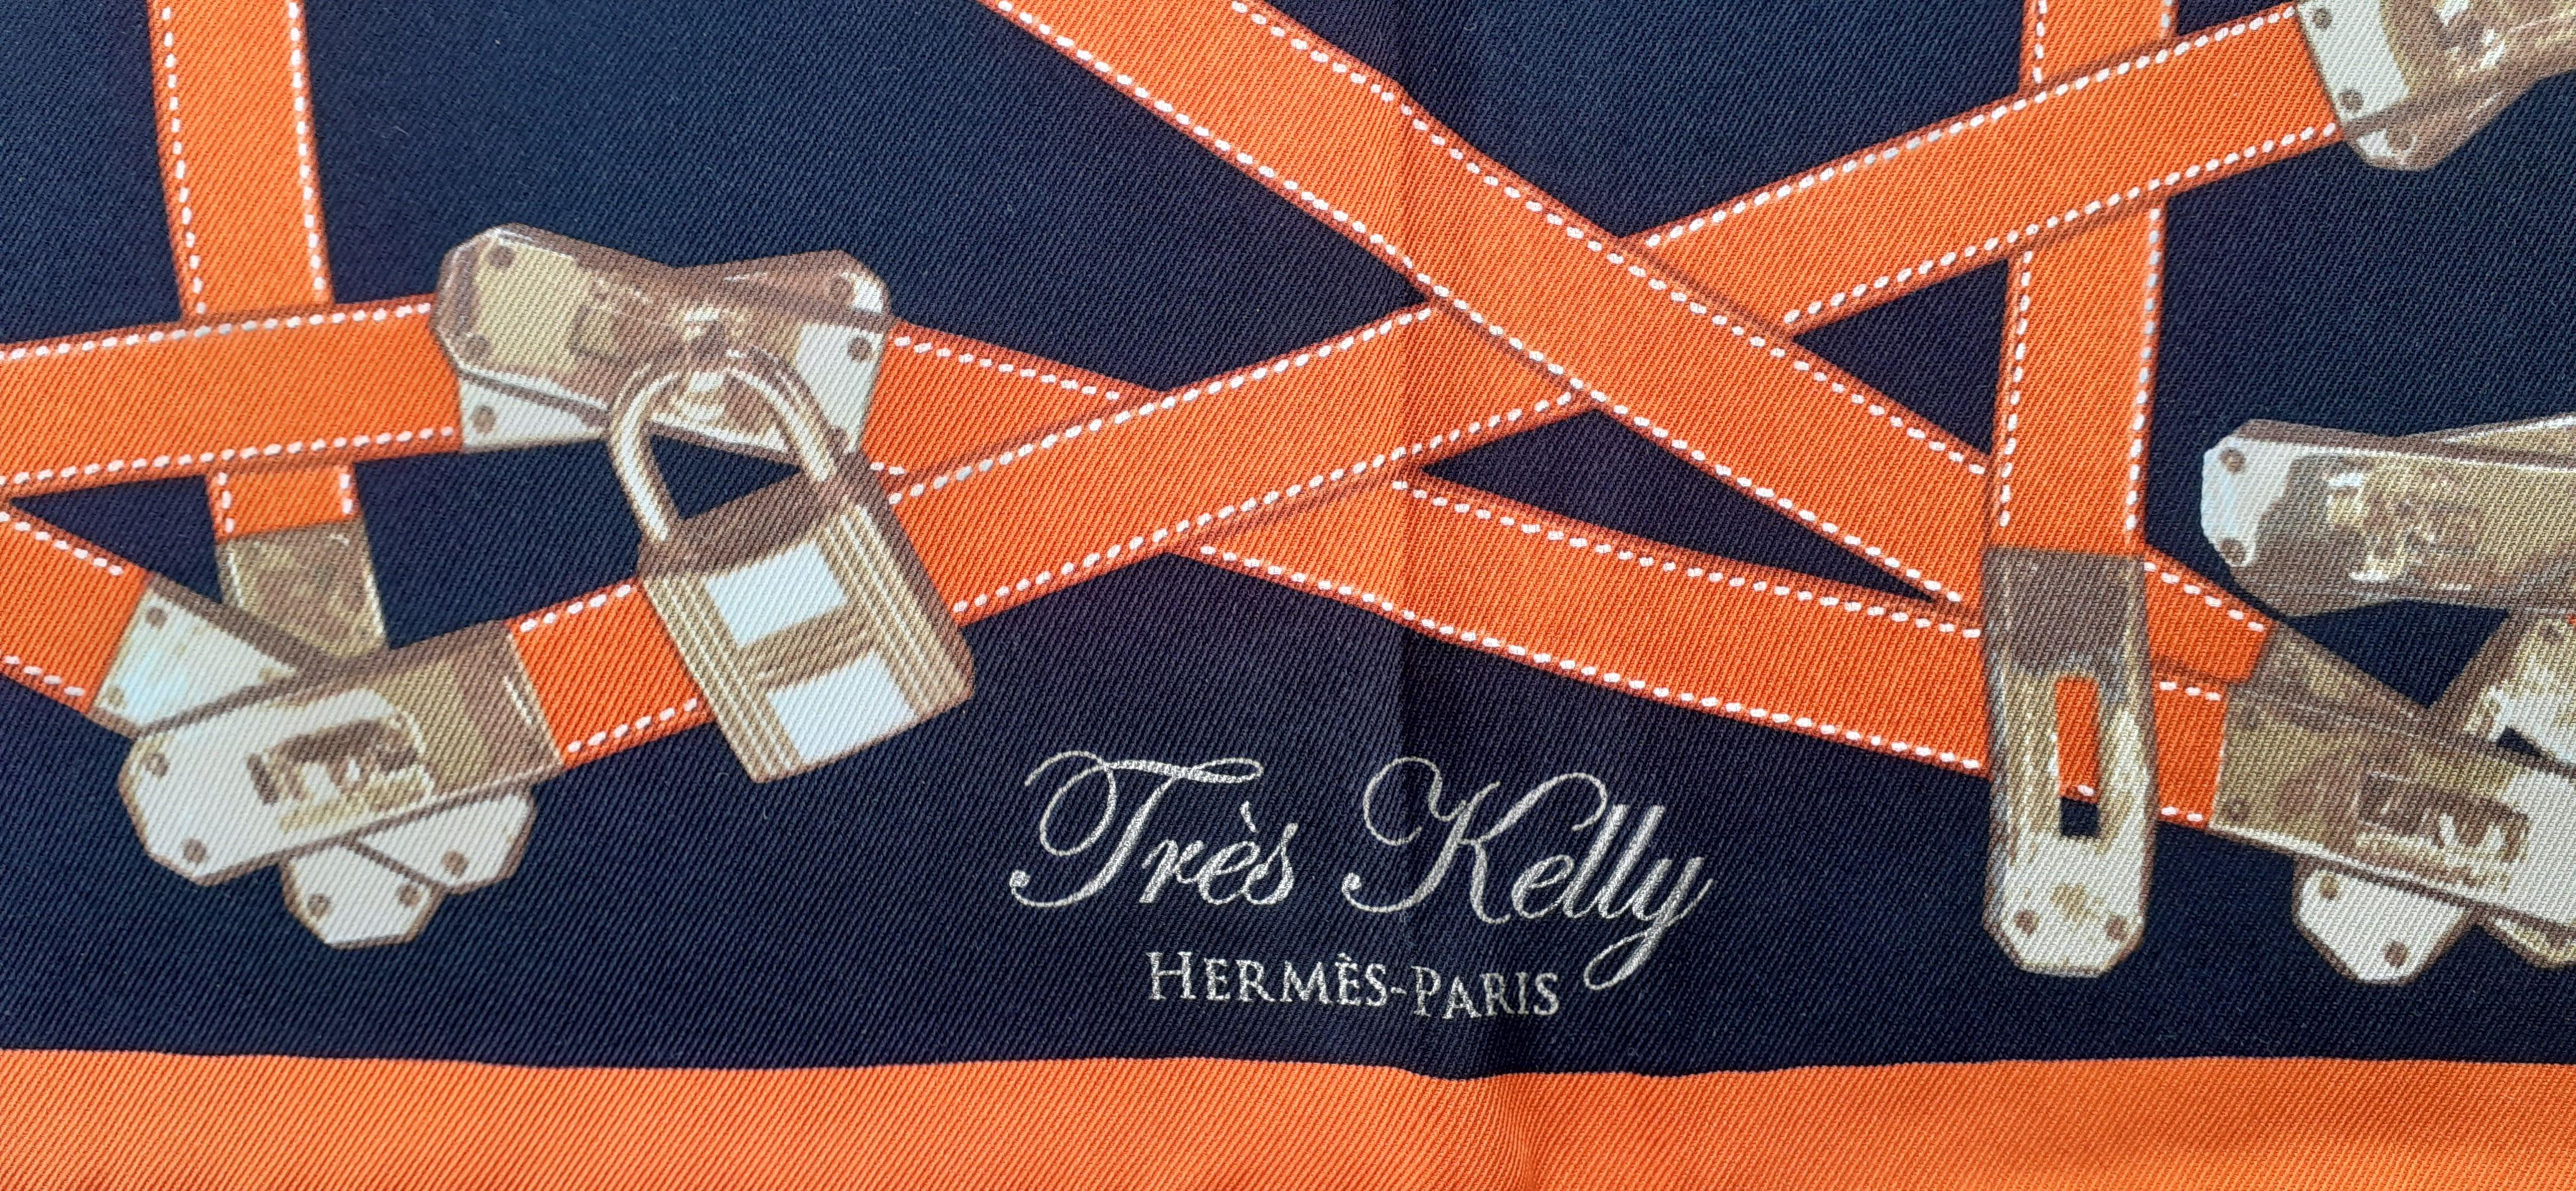 Rare Hermès Silk Scarf Très Kelly Black Orange 66 cm For Sale 1